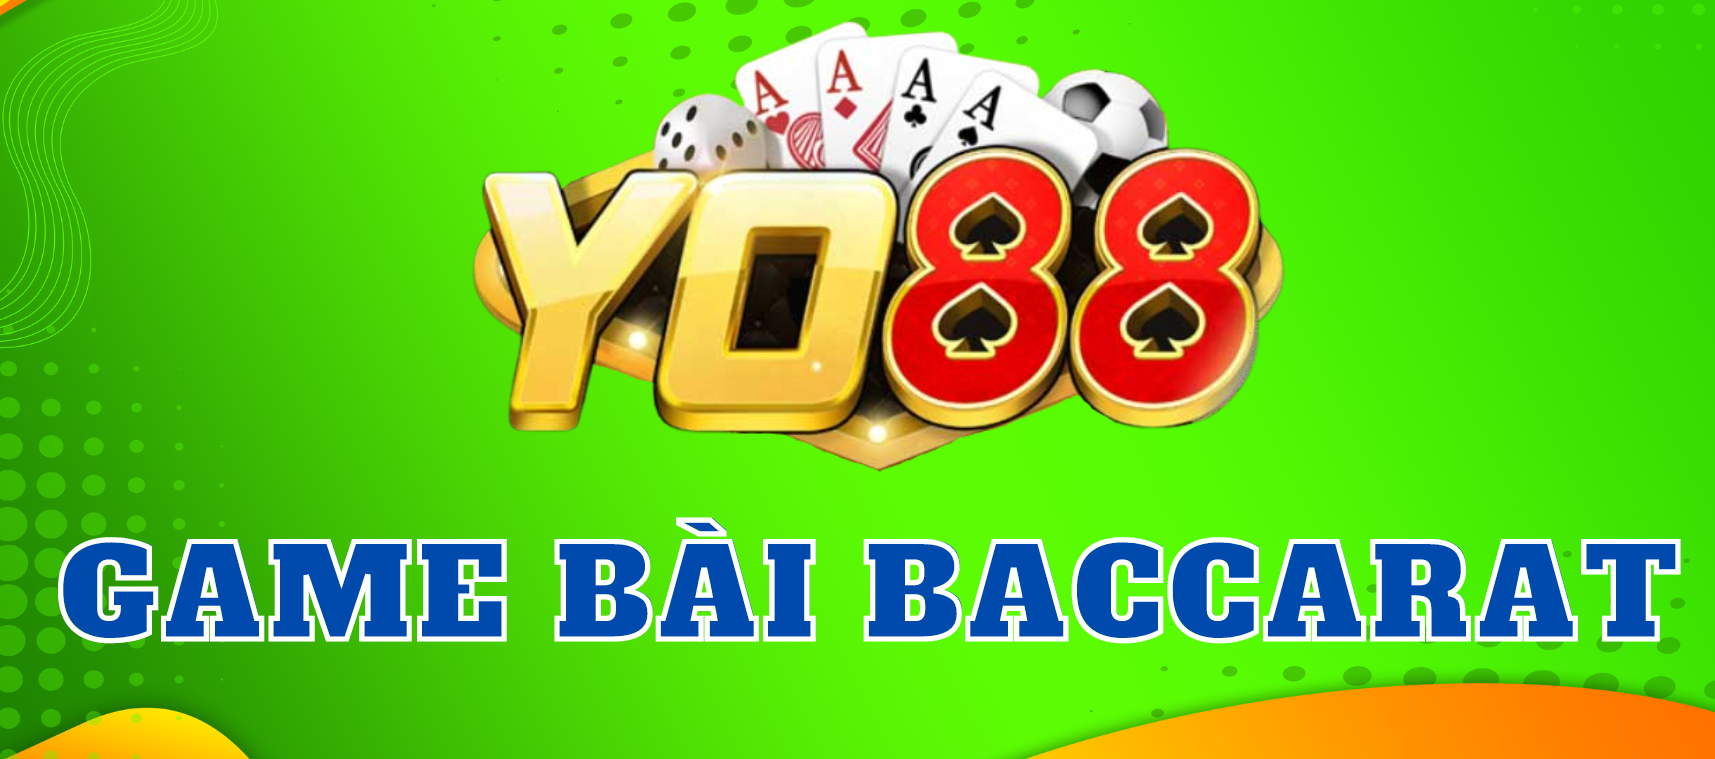 Game bài baccarat yo88